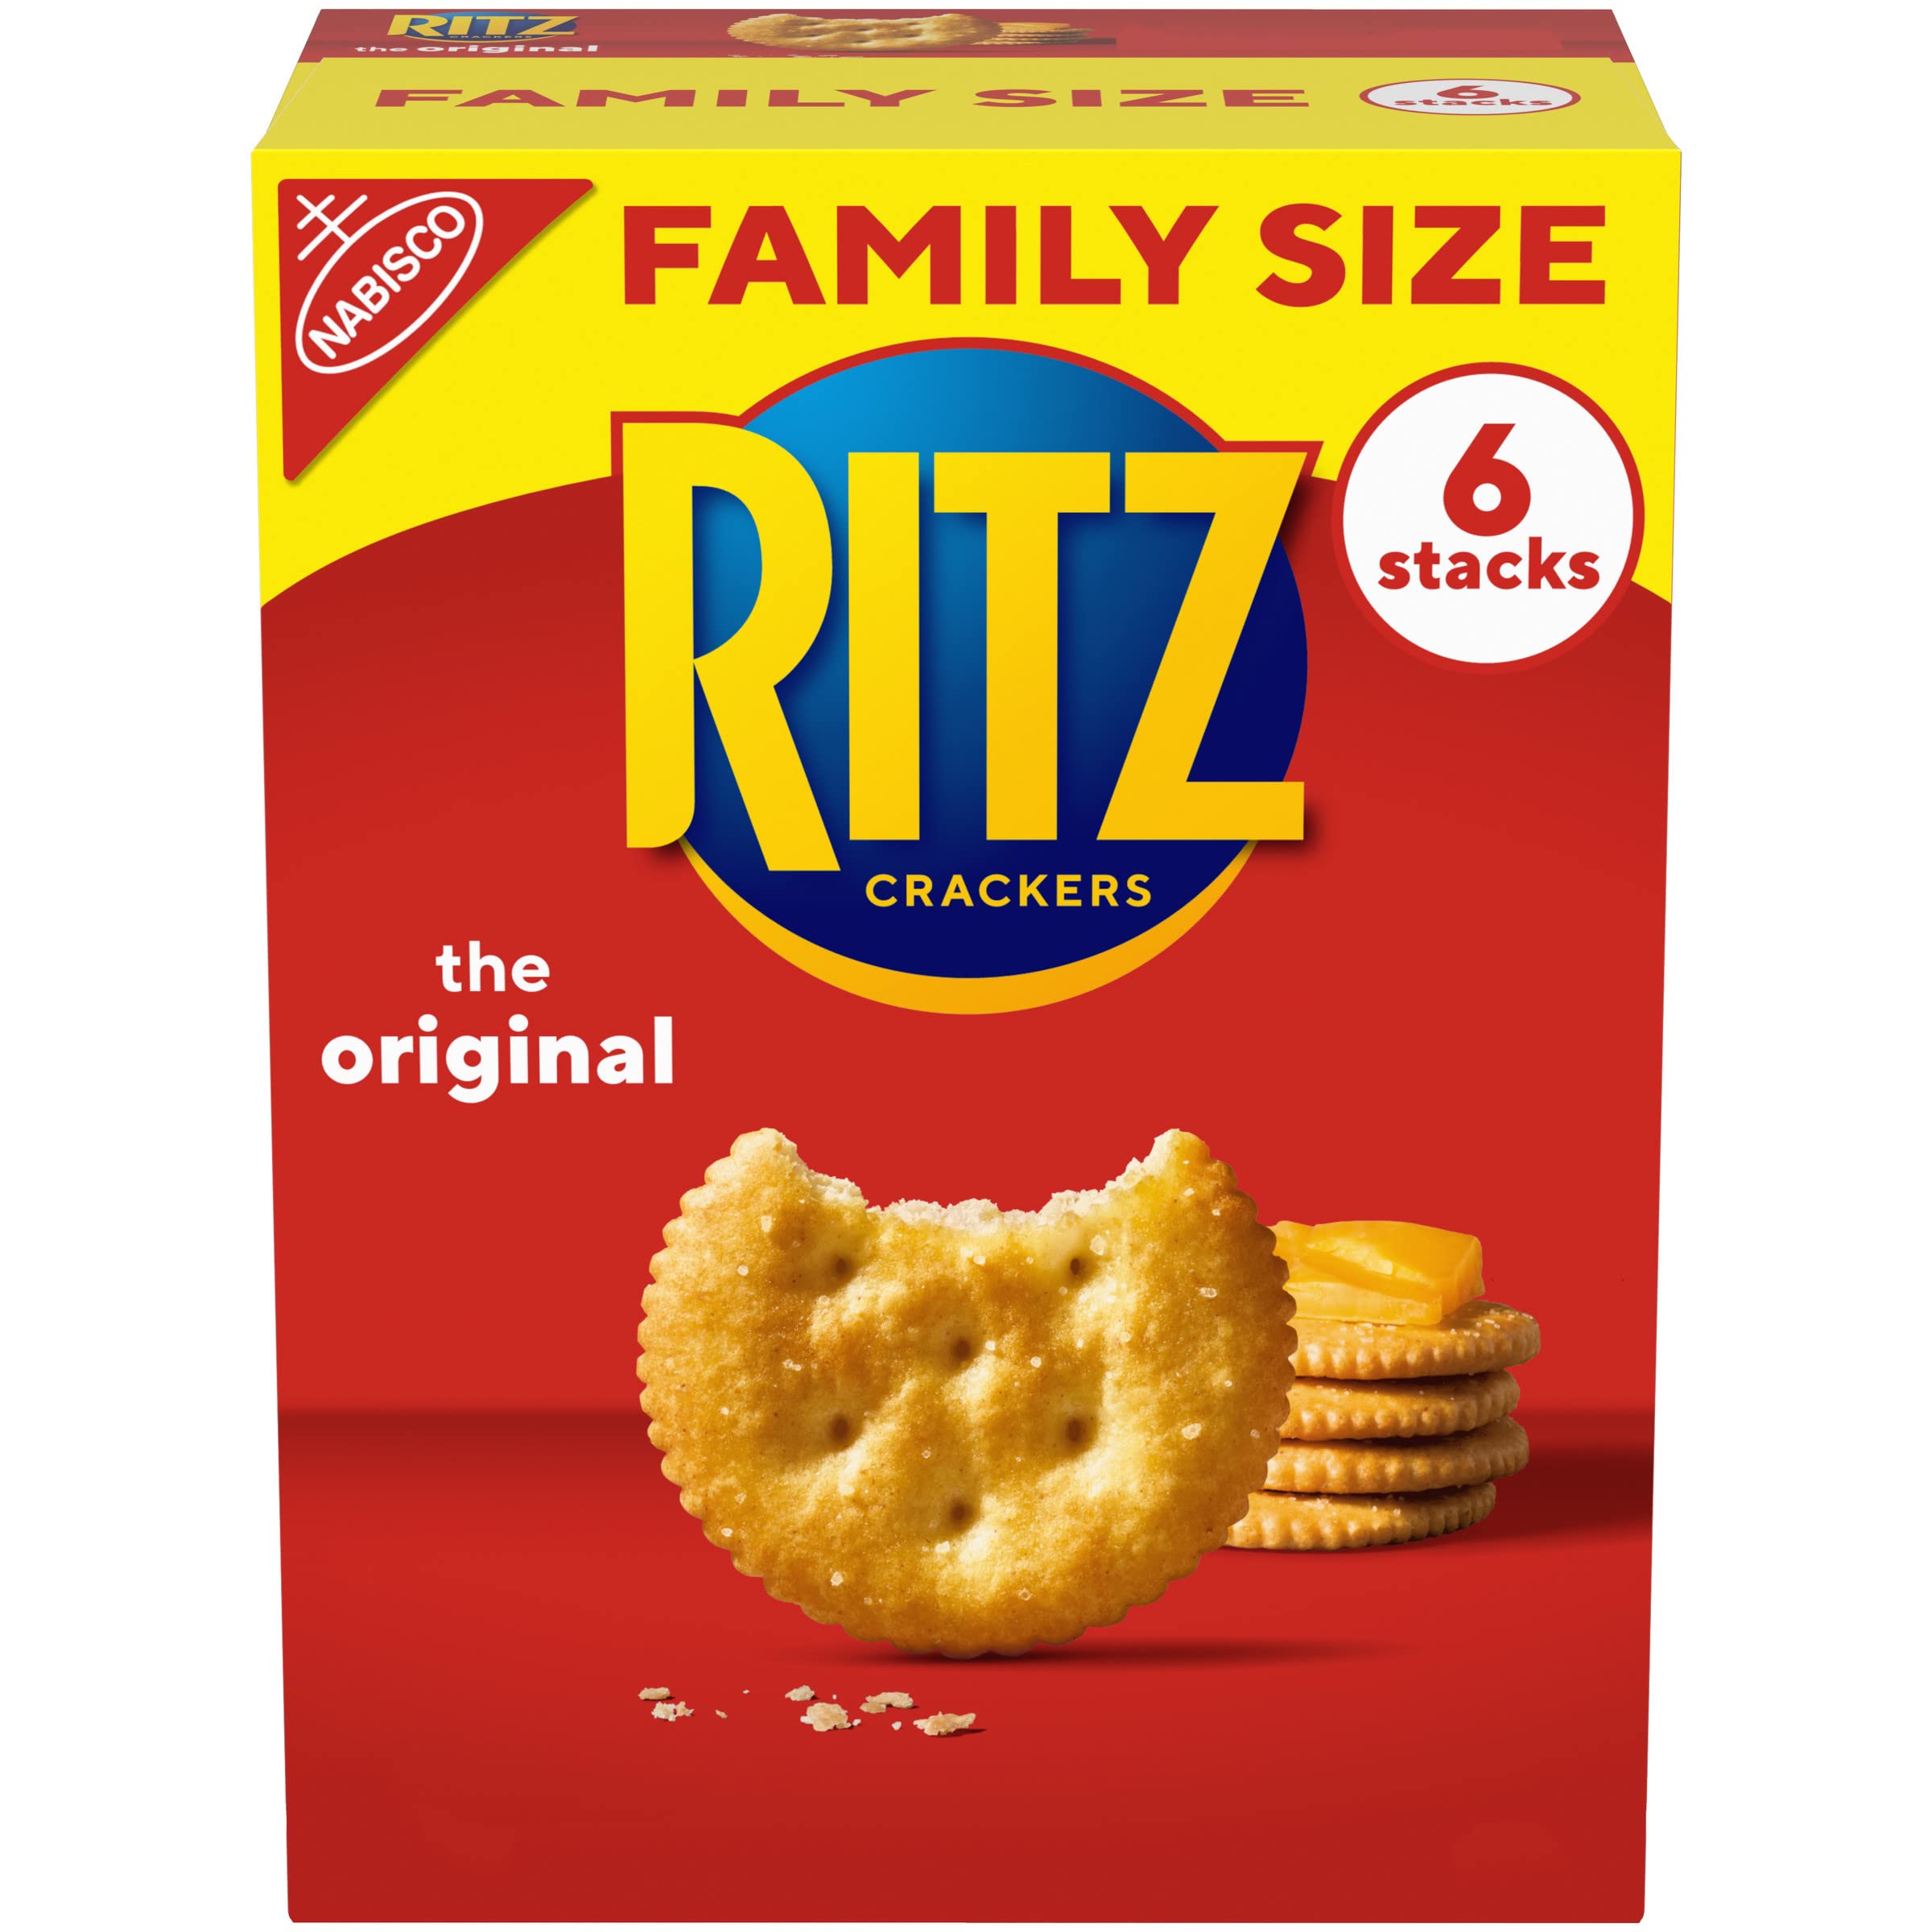 20.5-Oz Ritz Family Size Original Crackers $2.81 w/S&S + Free Shipping w/ Prime or on $35+